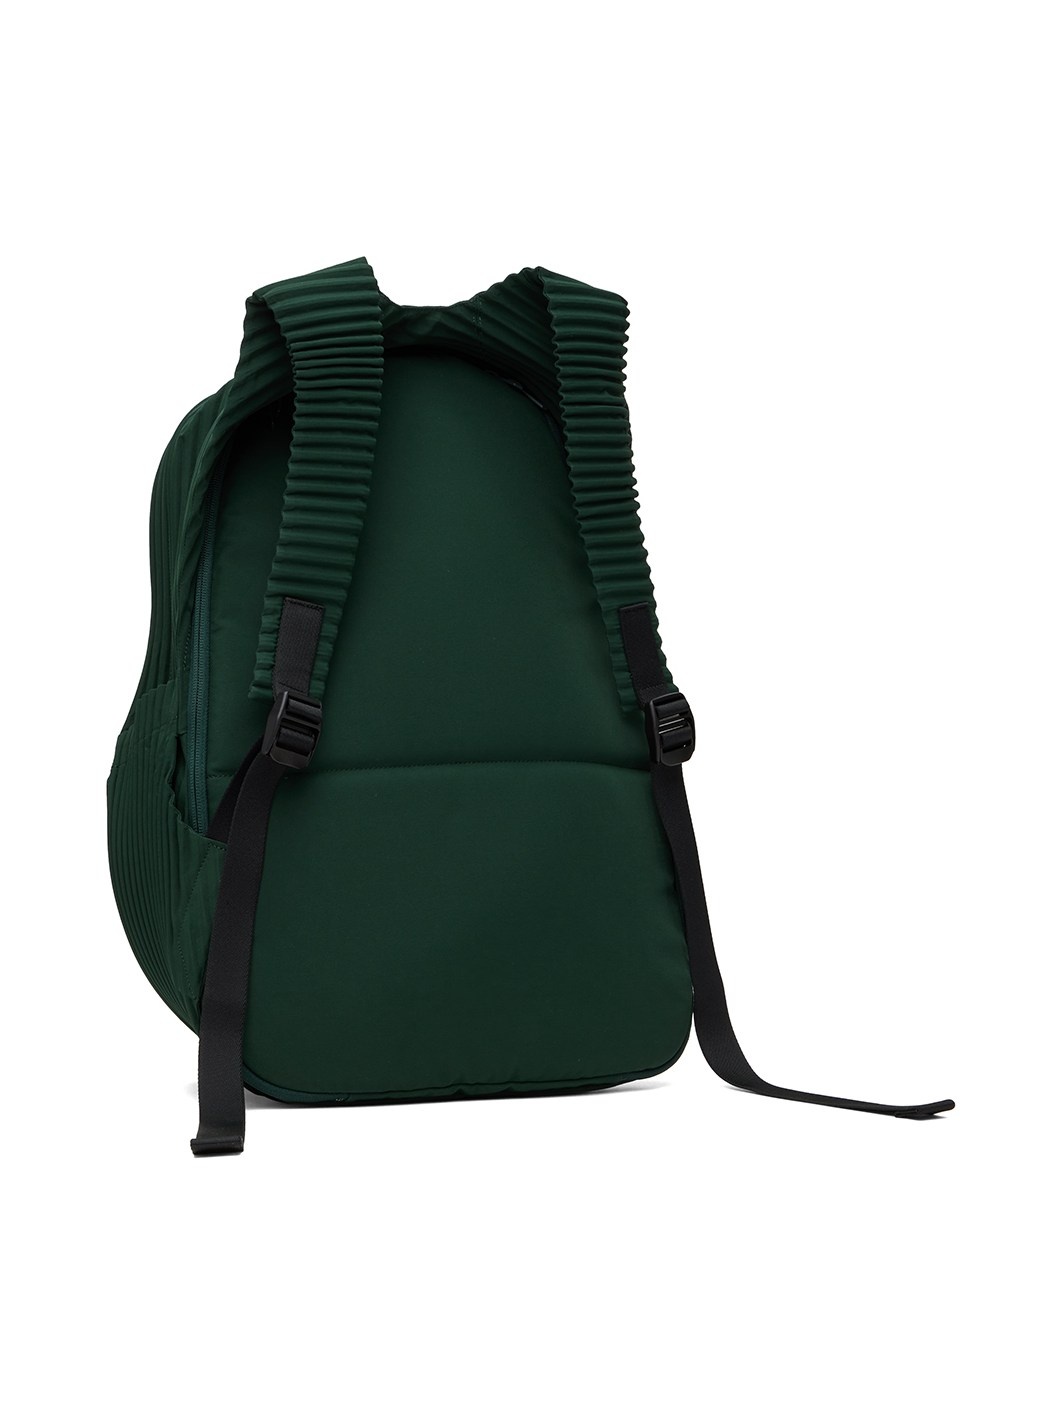 Green Pleats Daypack Backpack - 3